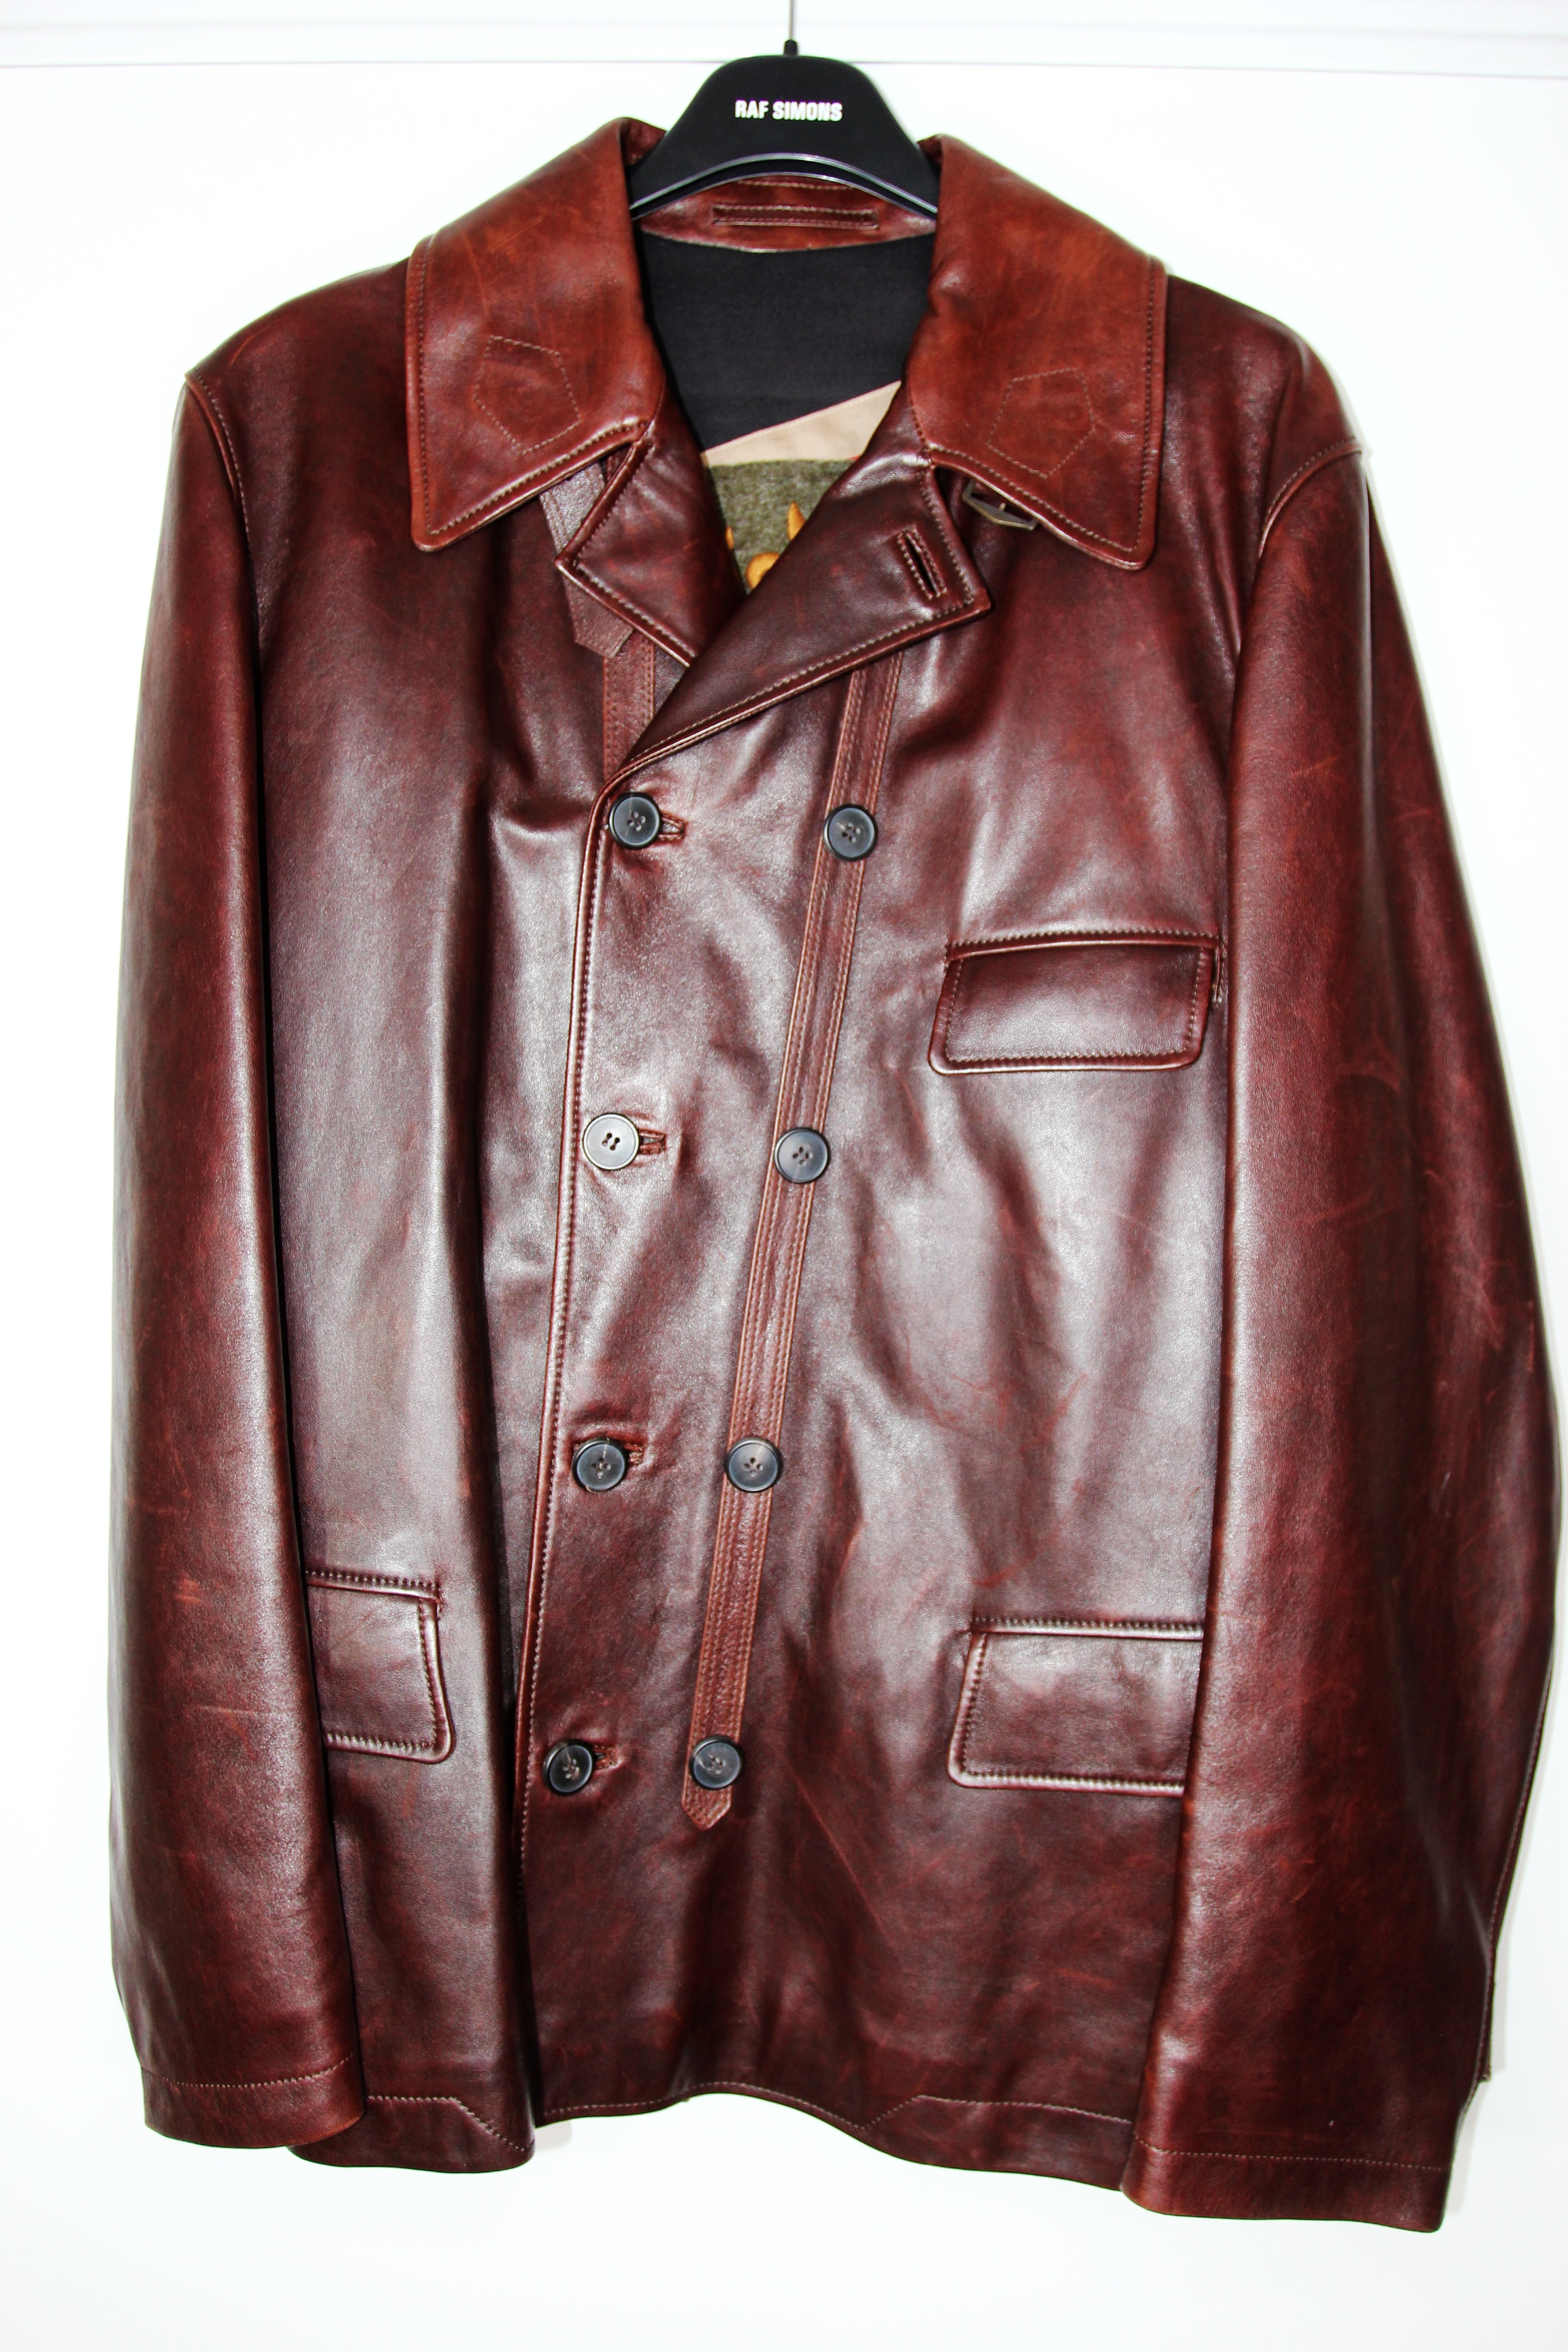 vintage leather jacket L dries van noten theleadershiftproject.com